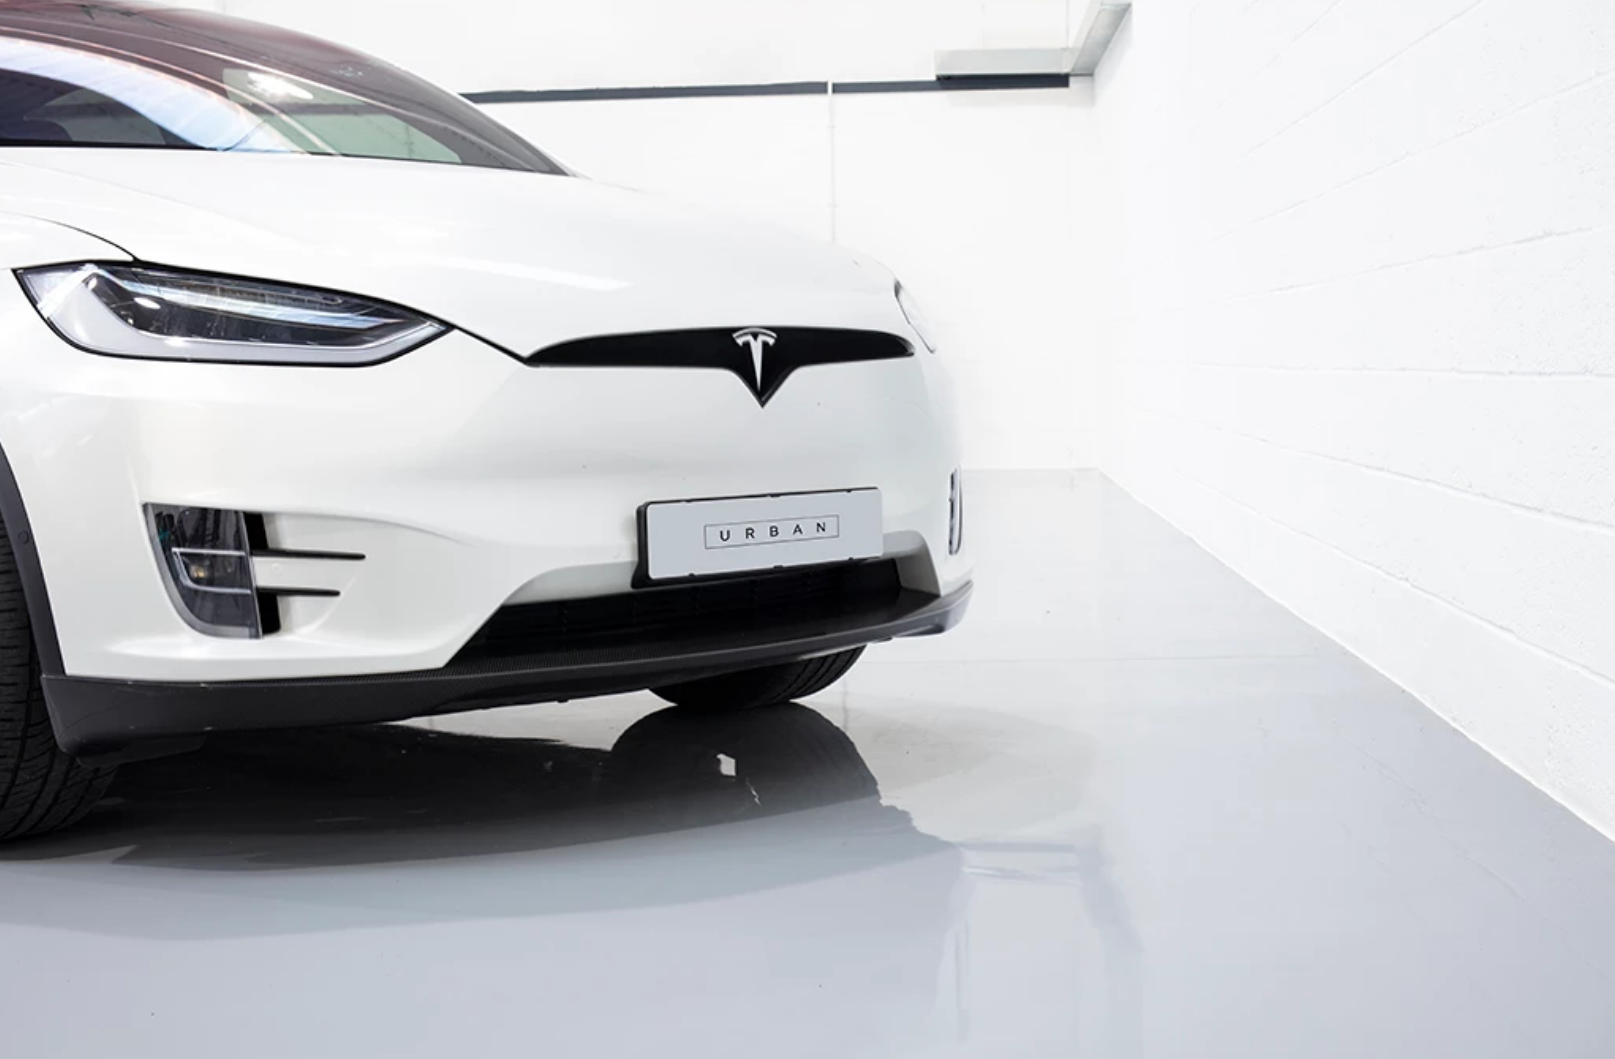 Urban  body kit for Tesla Model X carbon fiber